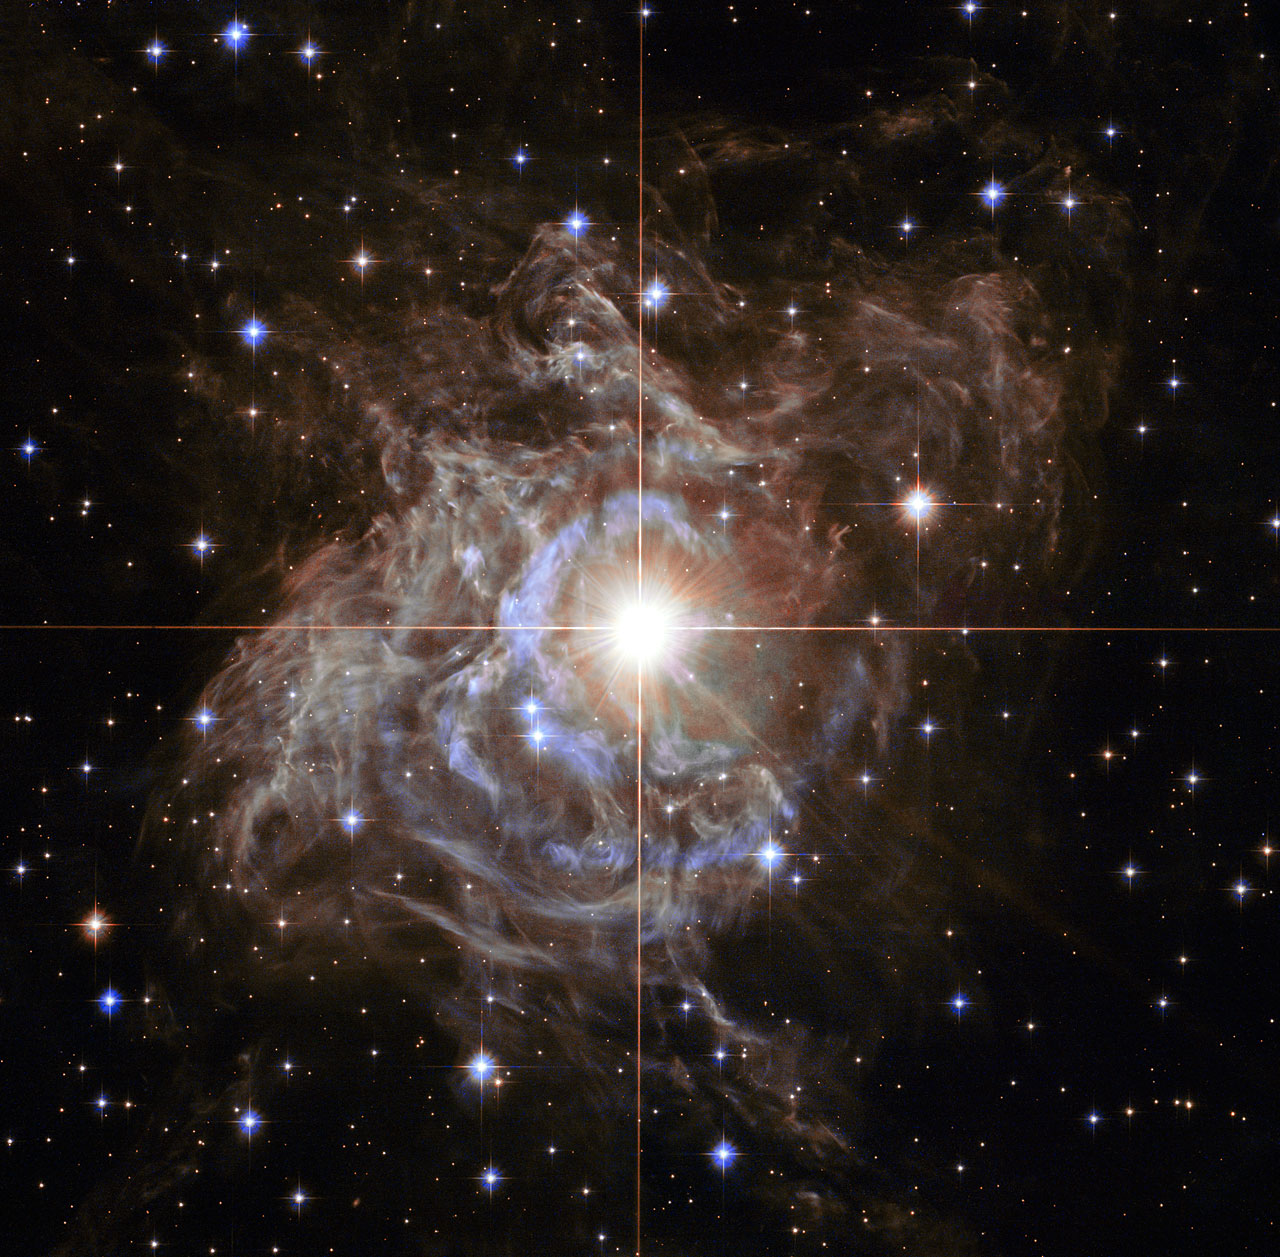 RS Puppis (Cepheid variable star)